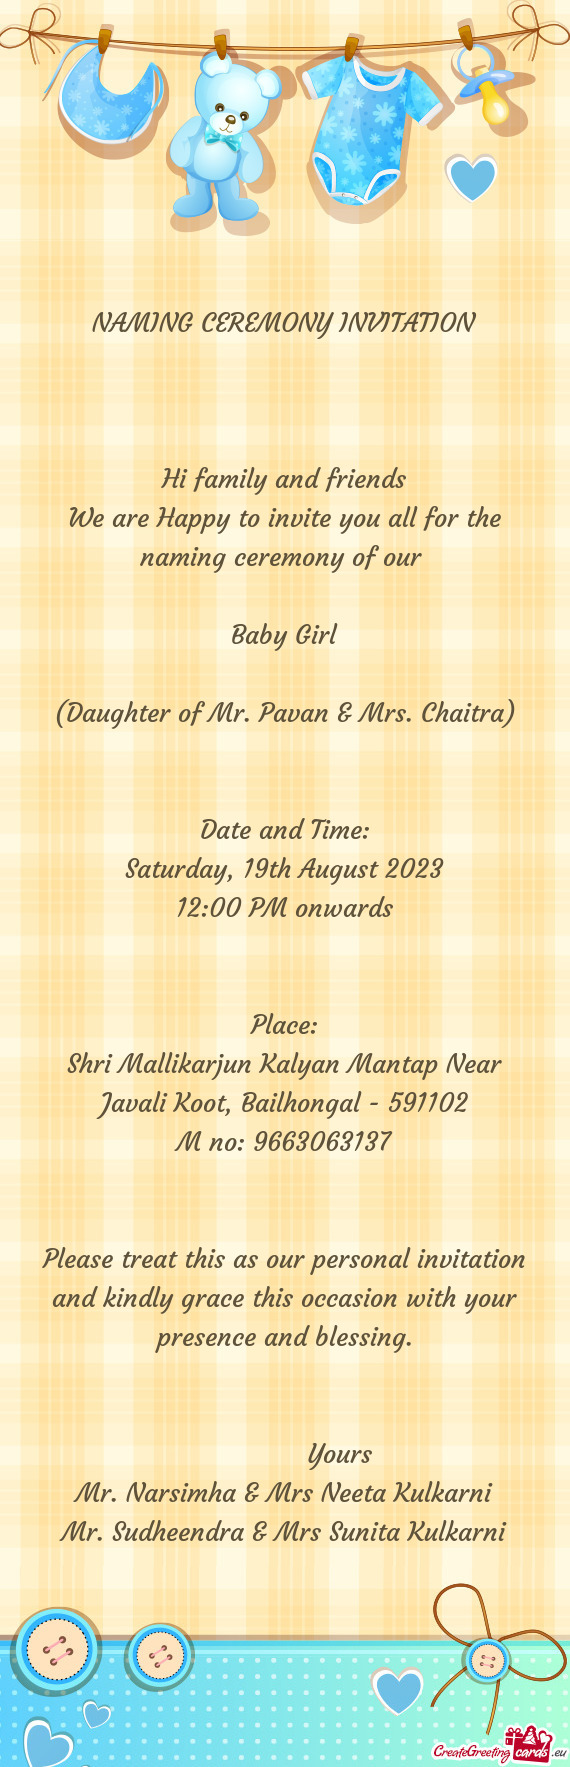 (Daughter of Mr. Pavan & Mrs. Chaitra)